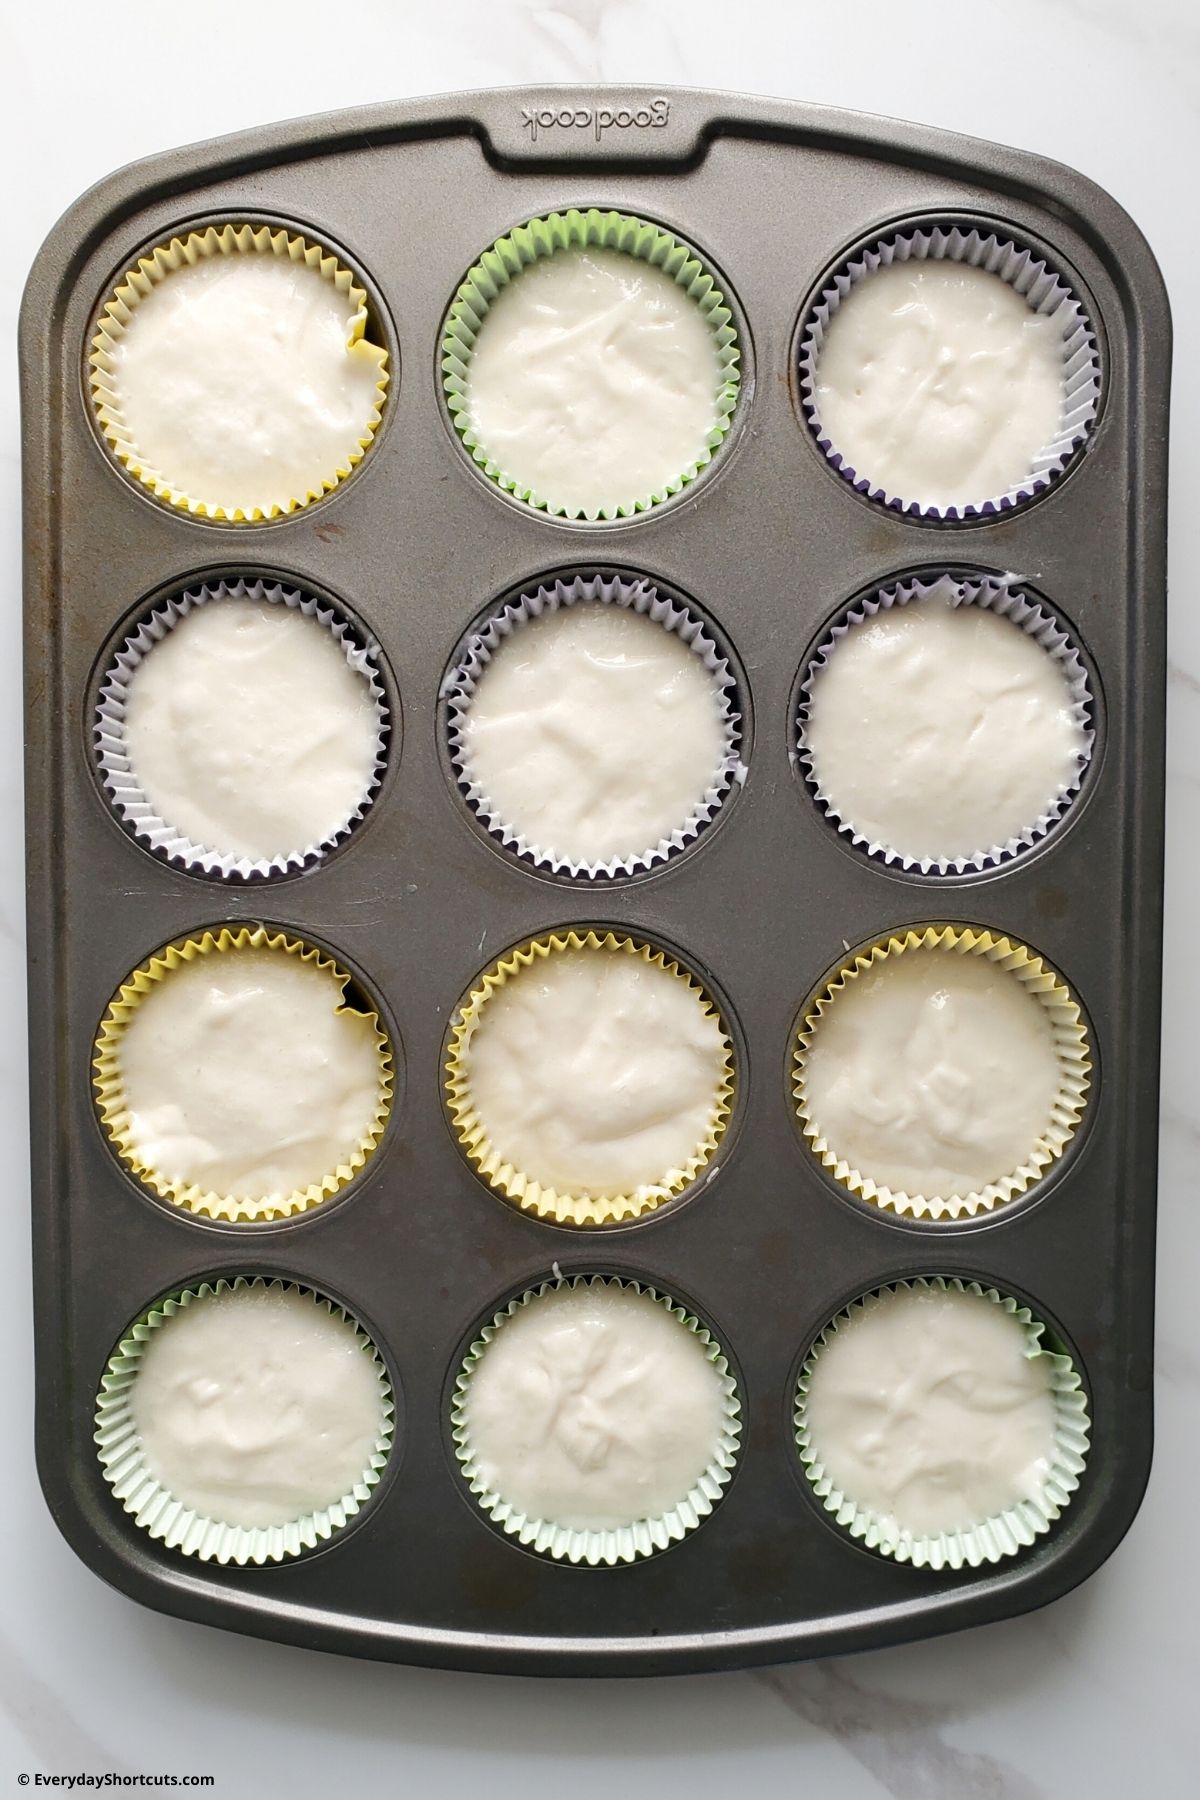 cupcake batter in muffin tins